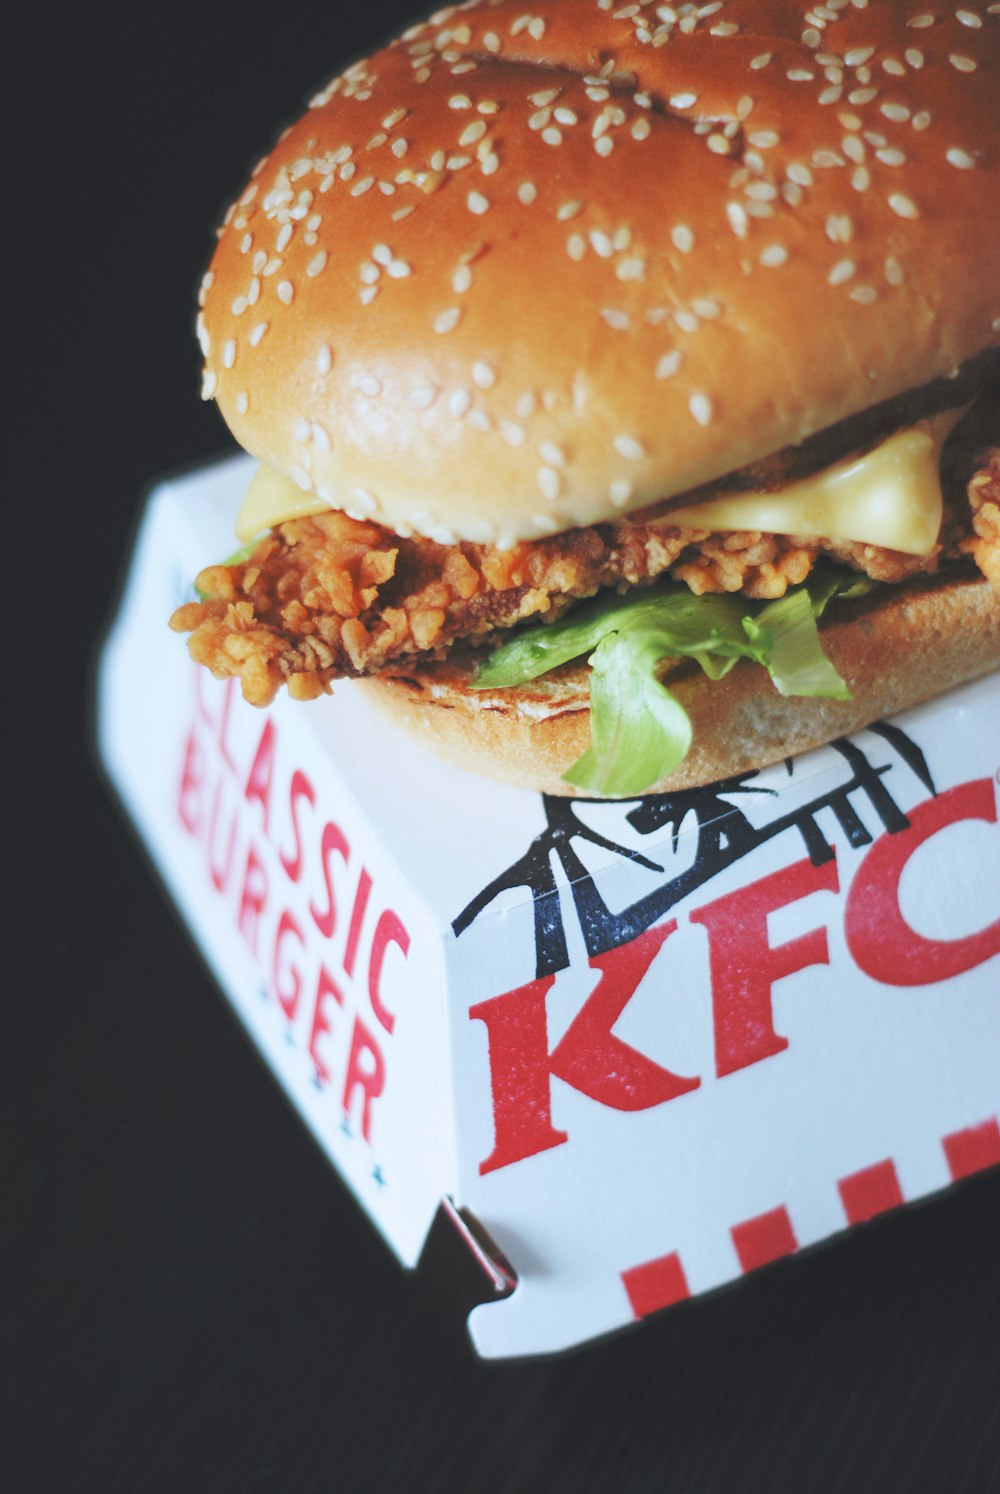 KFC hamburger and box photo – Free Food Image on Unsplash